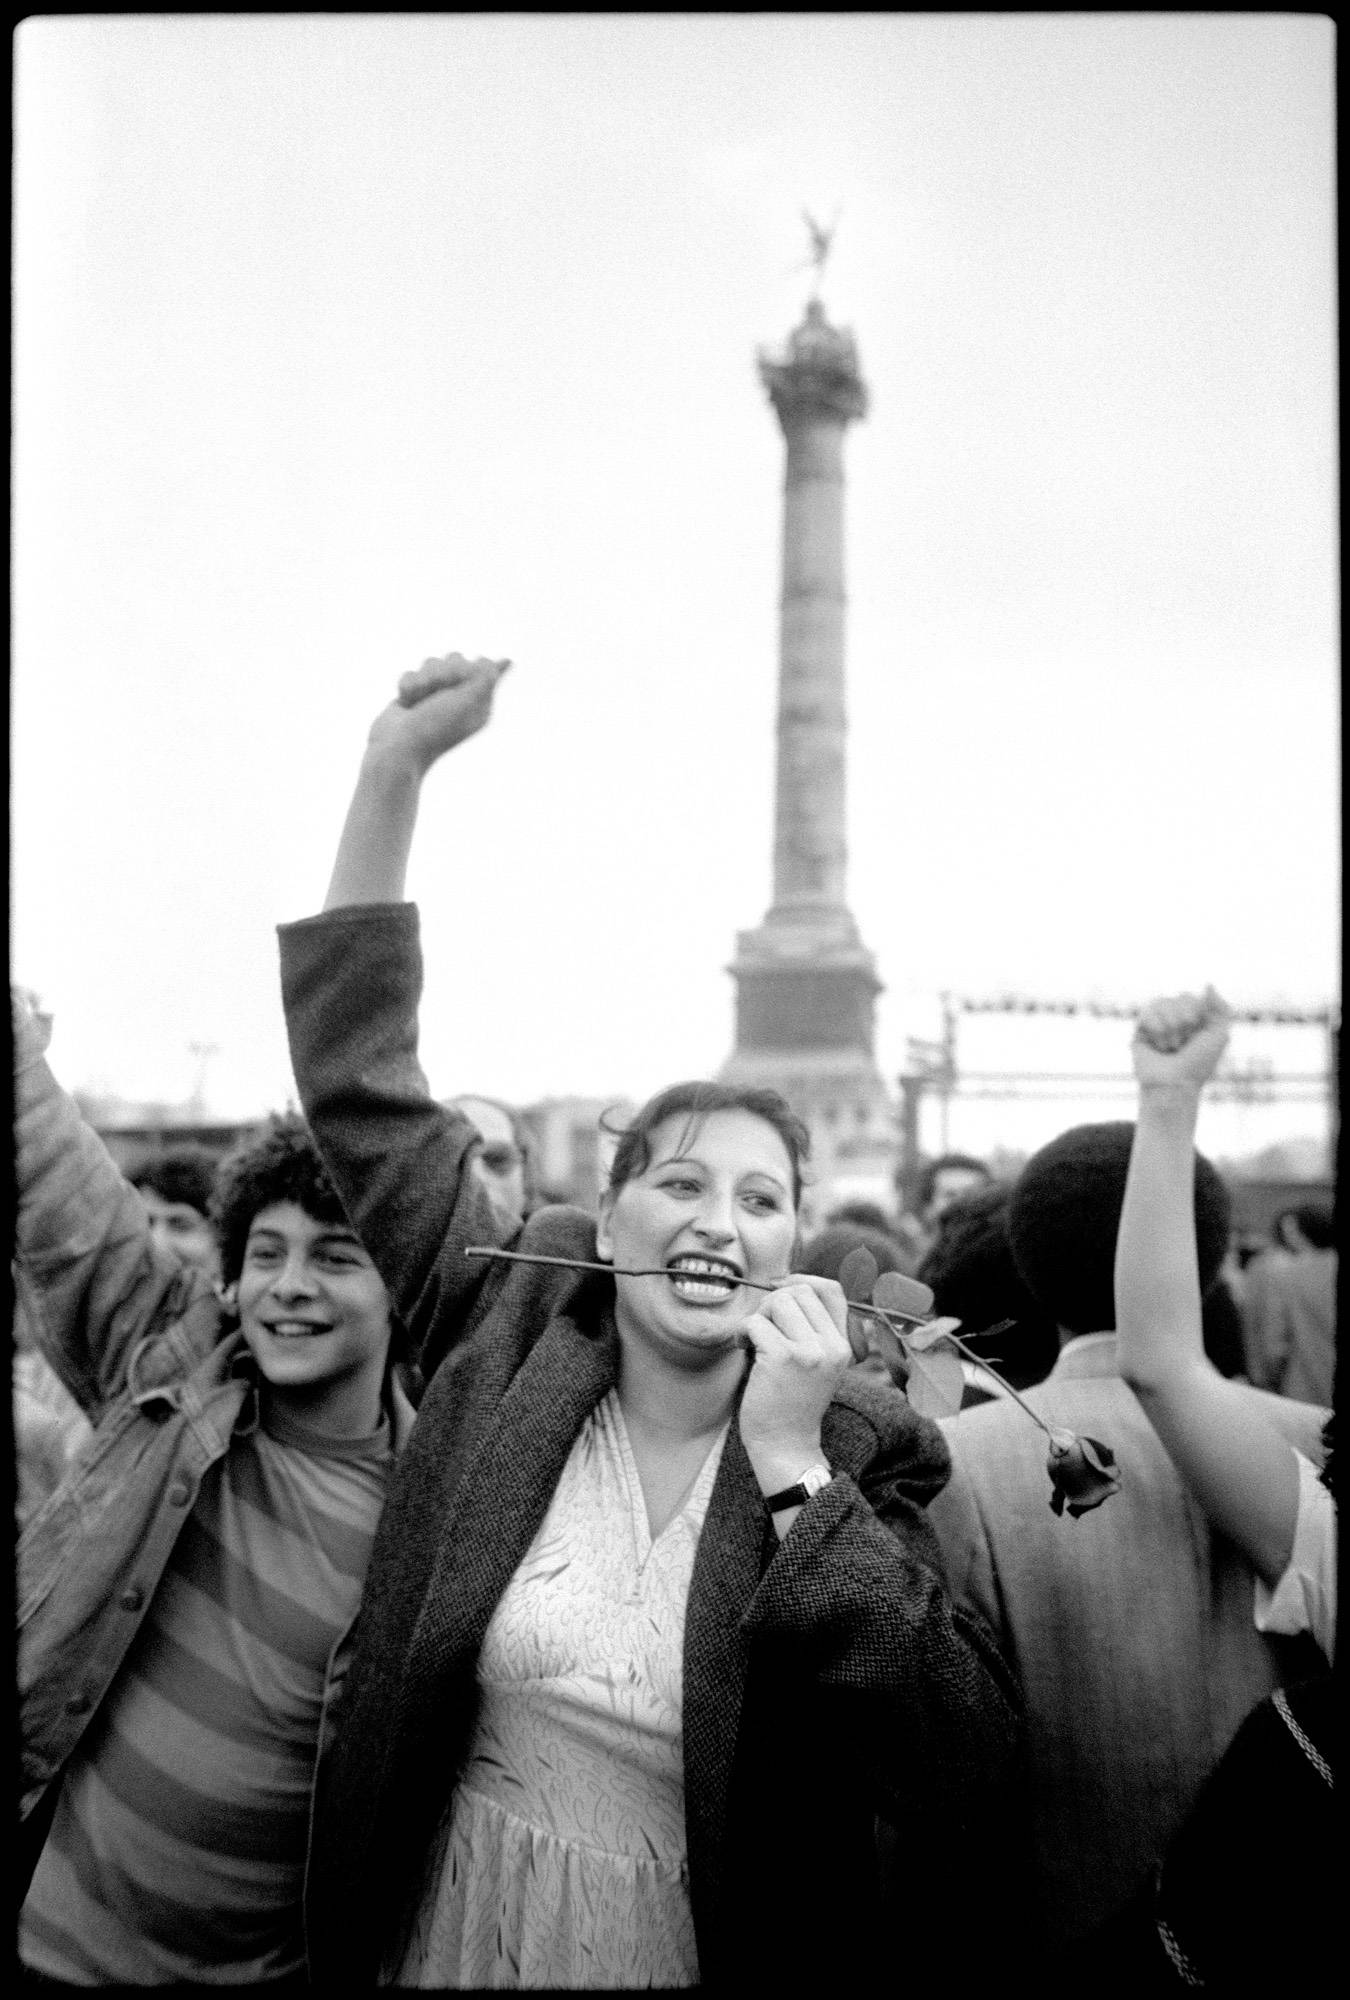 Yann Morvan, "La fête de la Bastille", 10 mai 1981, Paris. © Yann Morvan / Courtesy Edisens